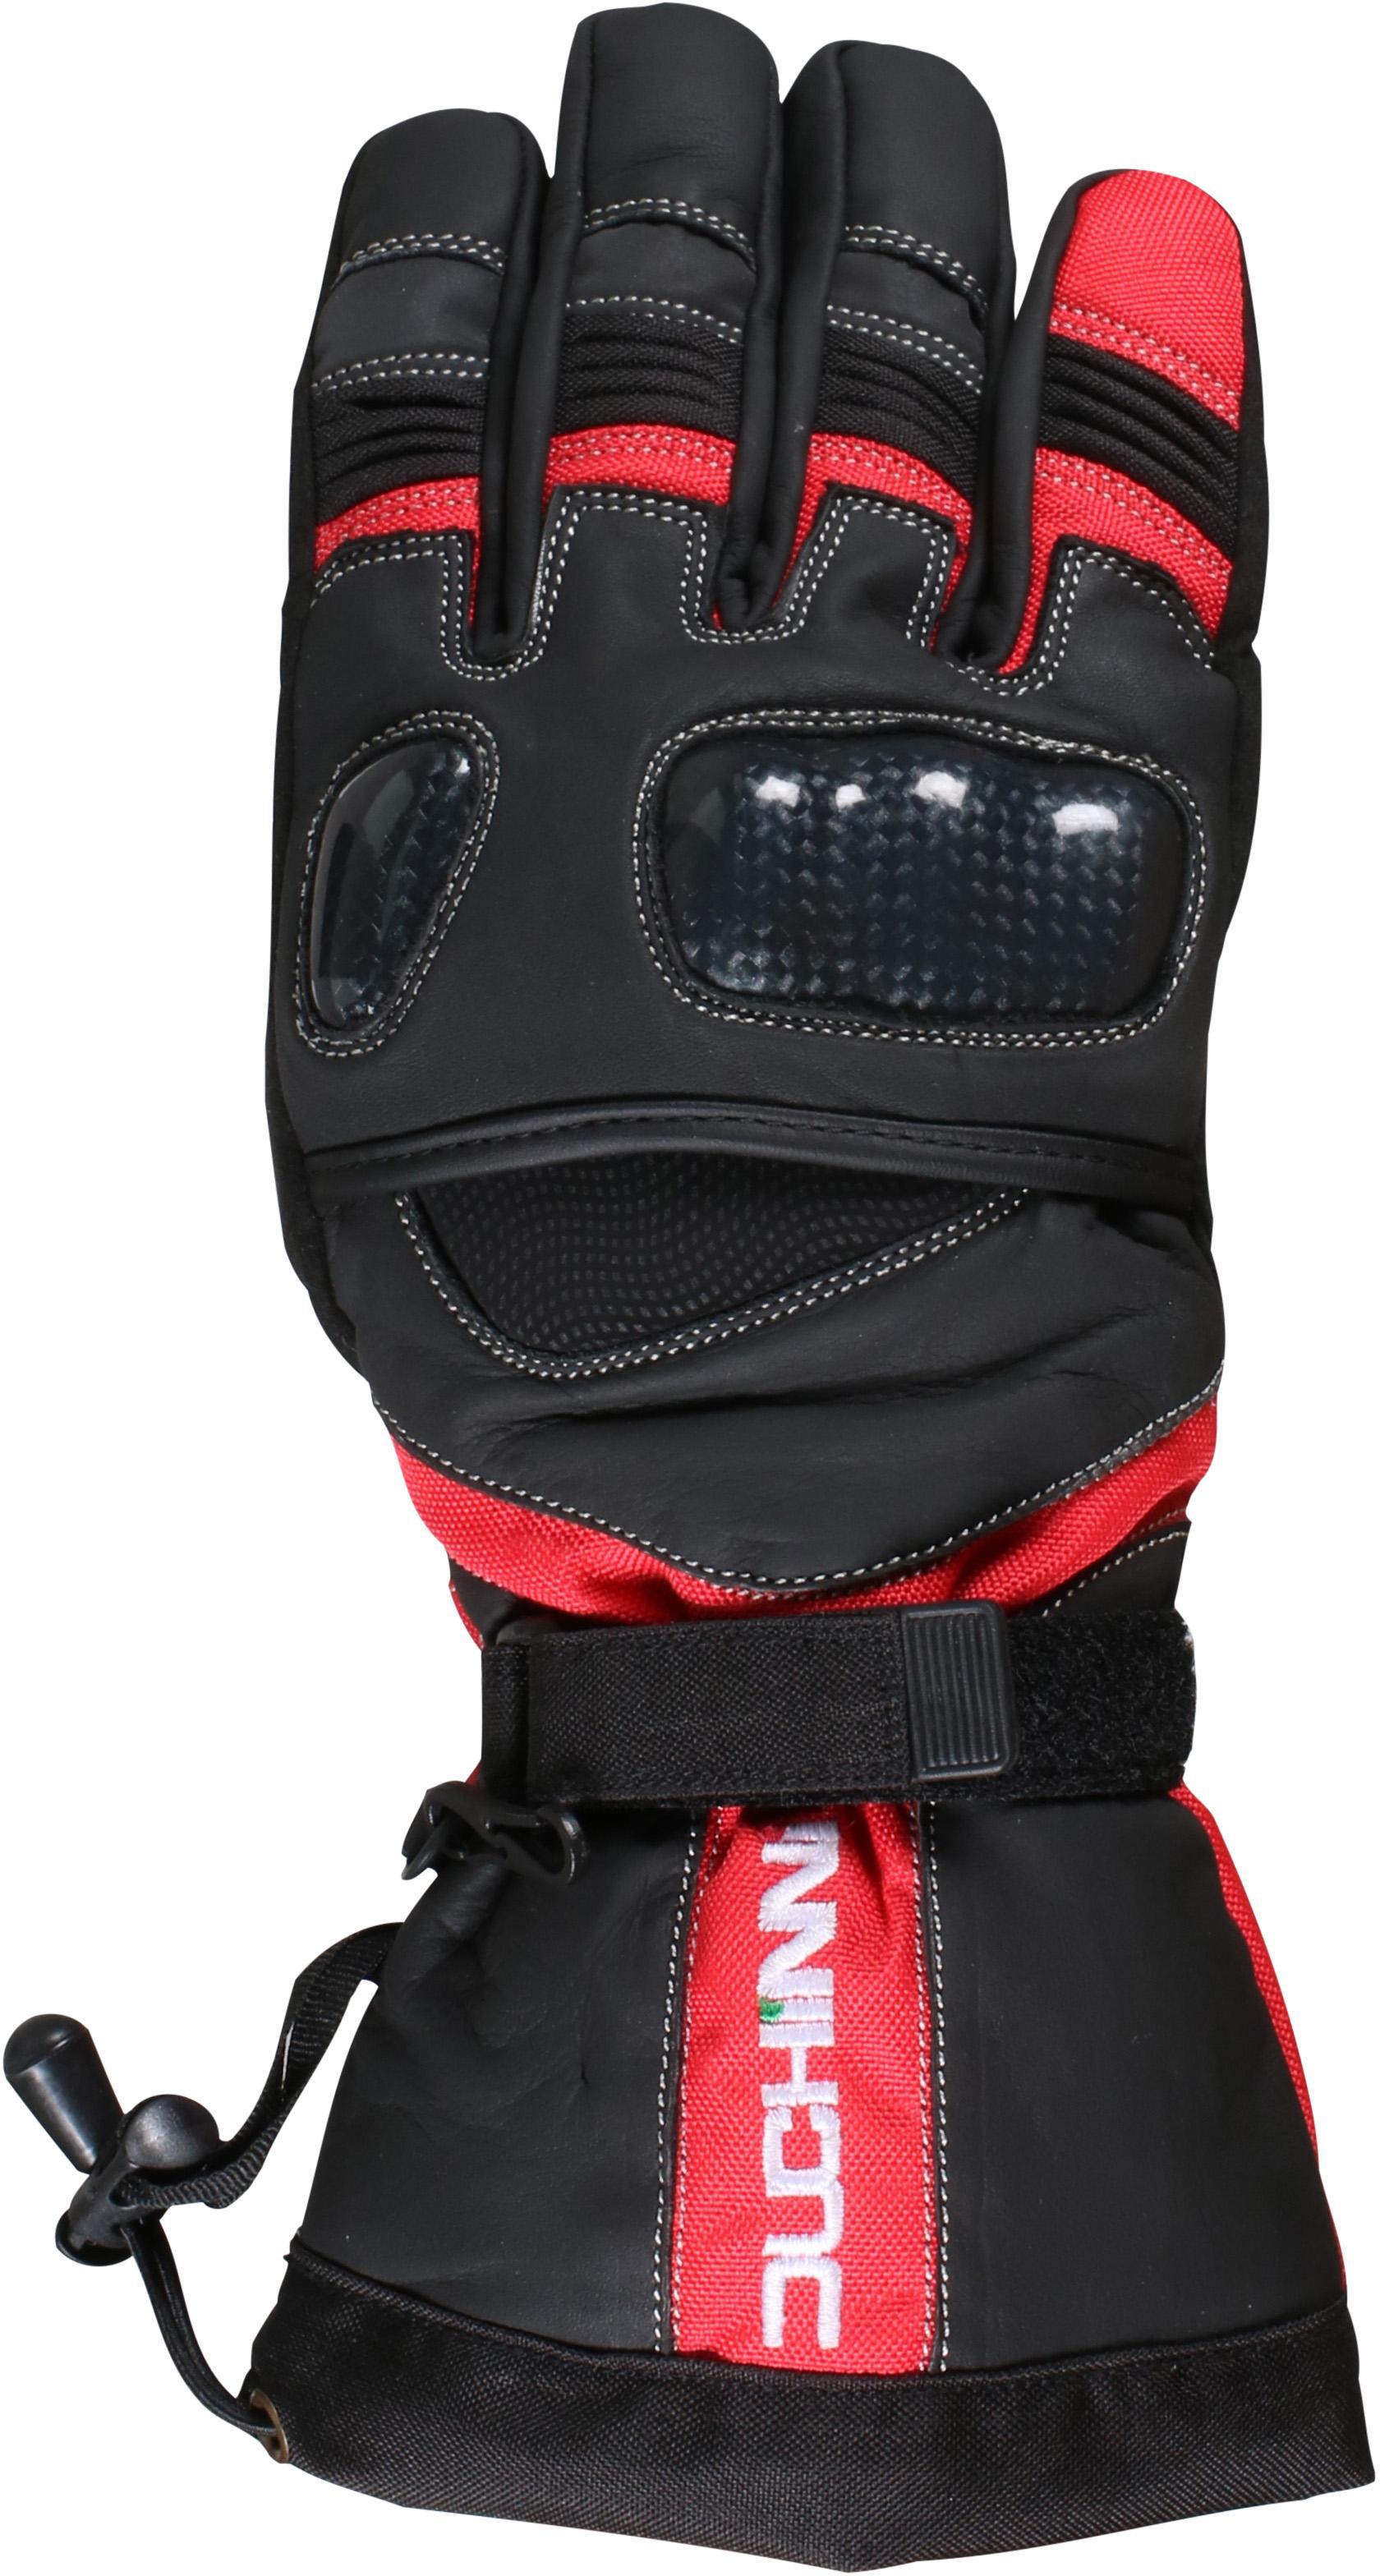 Duchinni Yukon Motorcycle Gloves - Black And Red, 2Xl